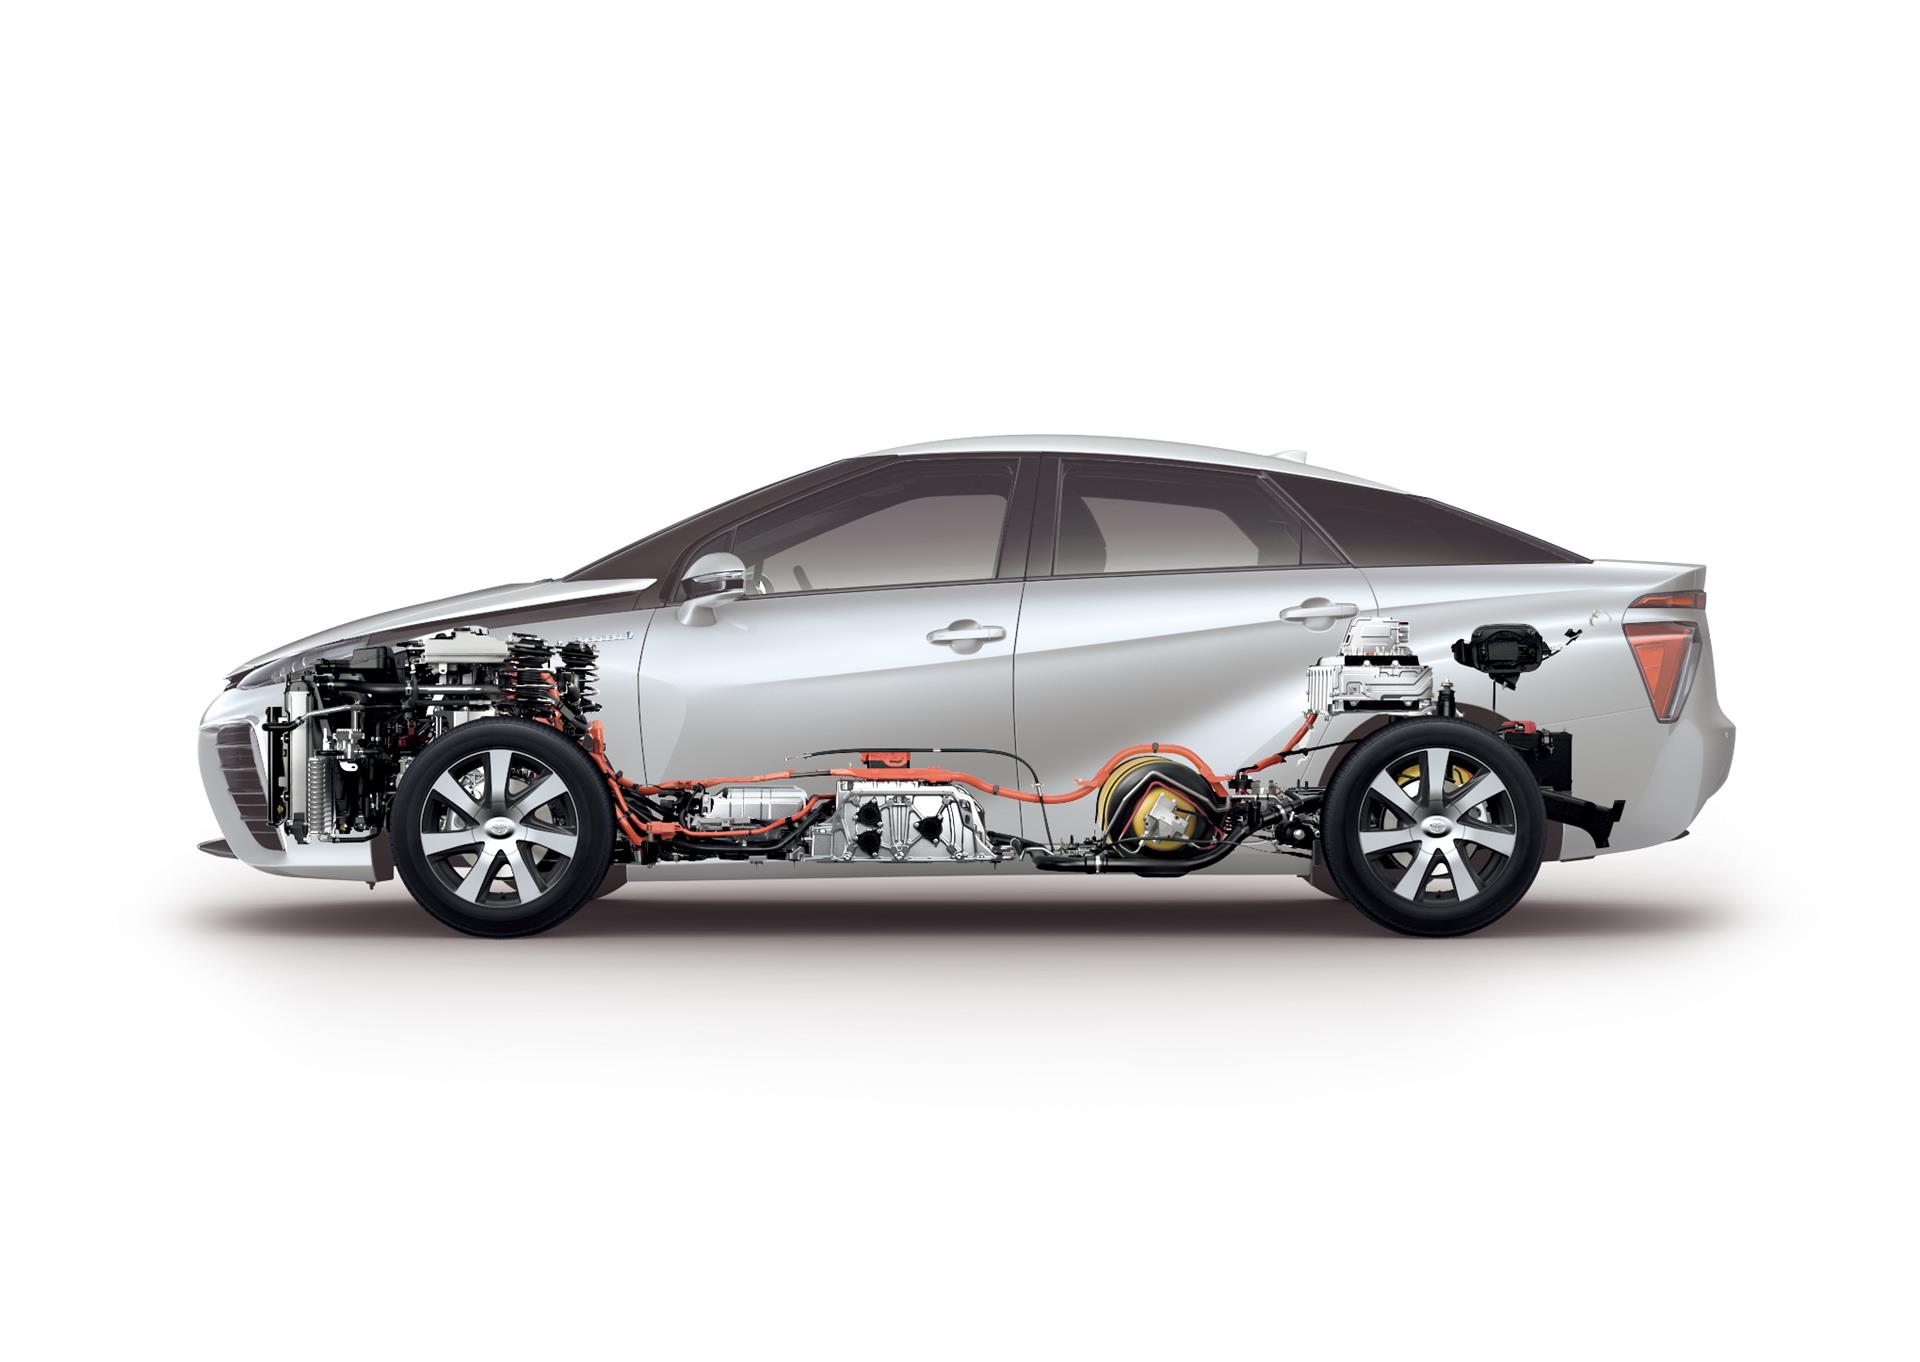 Toyota Mirai fuel cell sedan powertrain